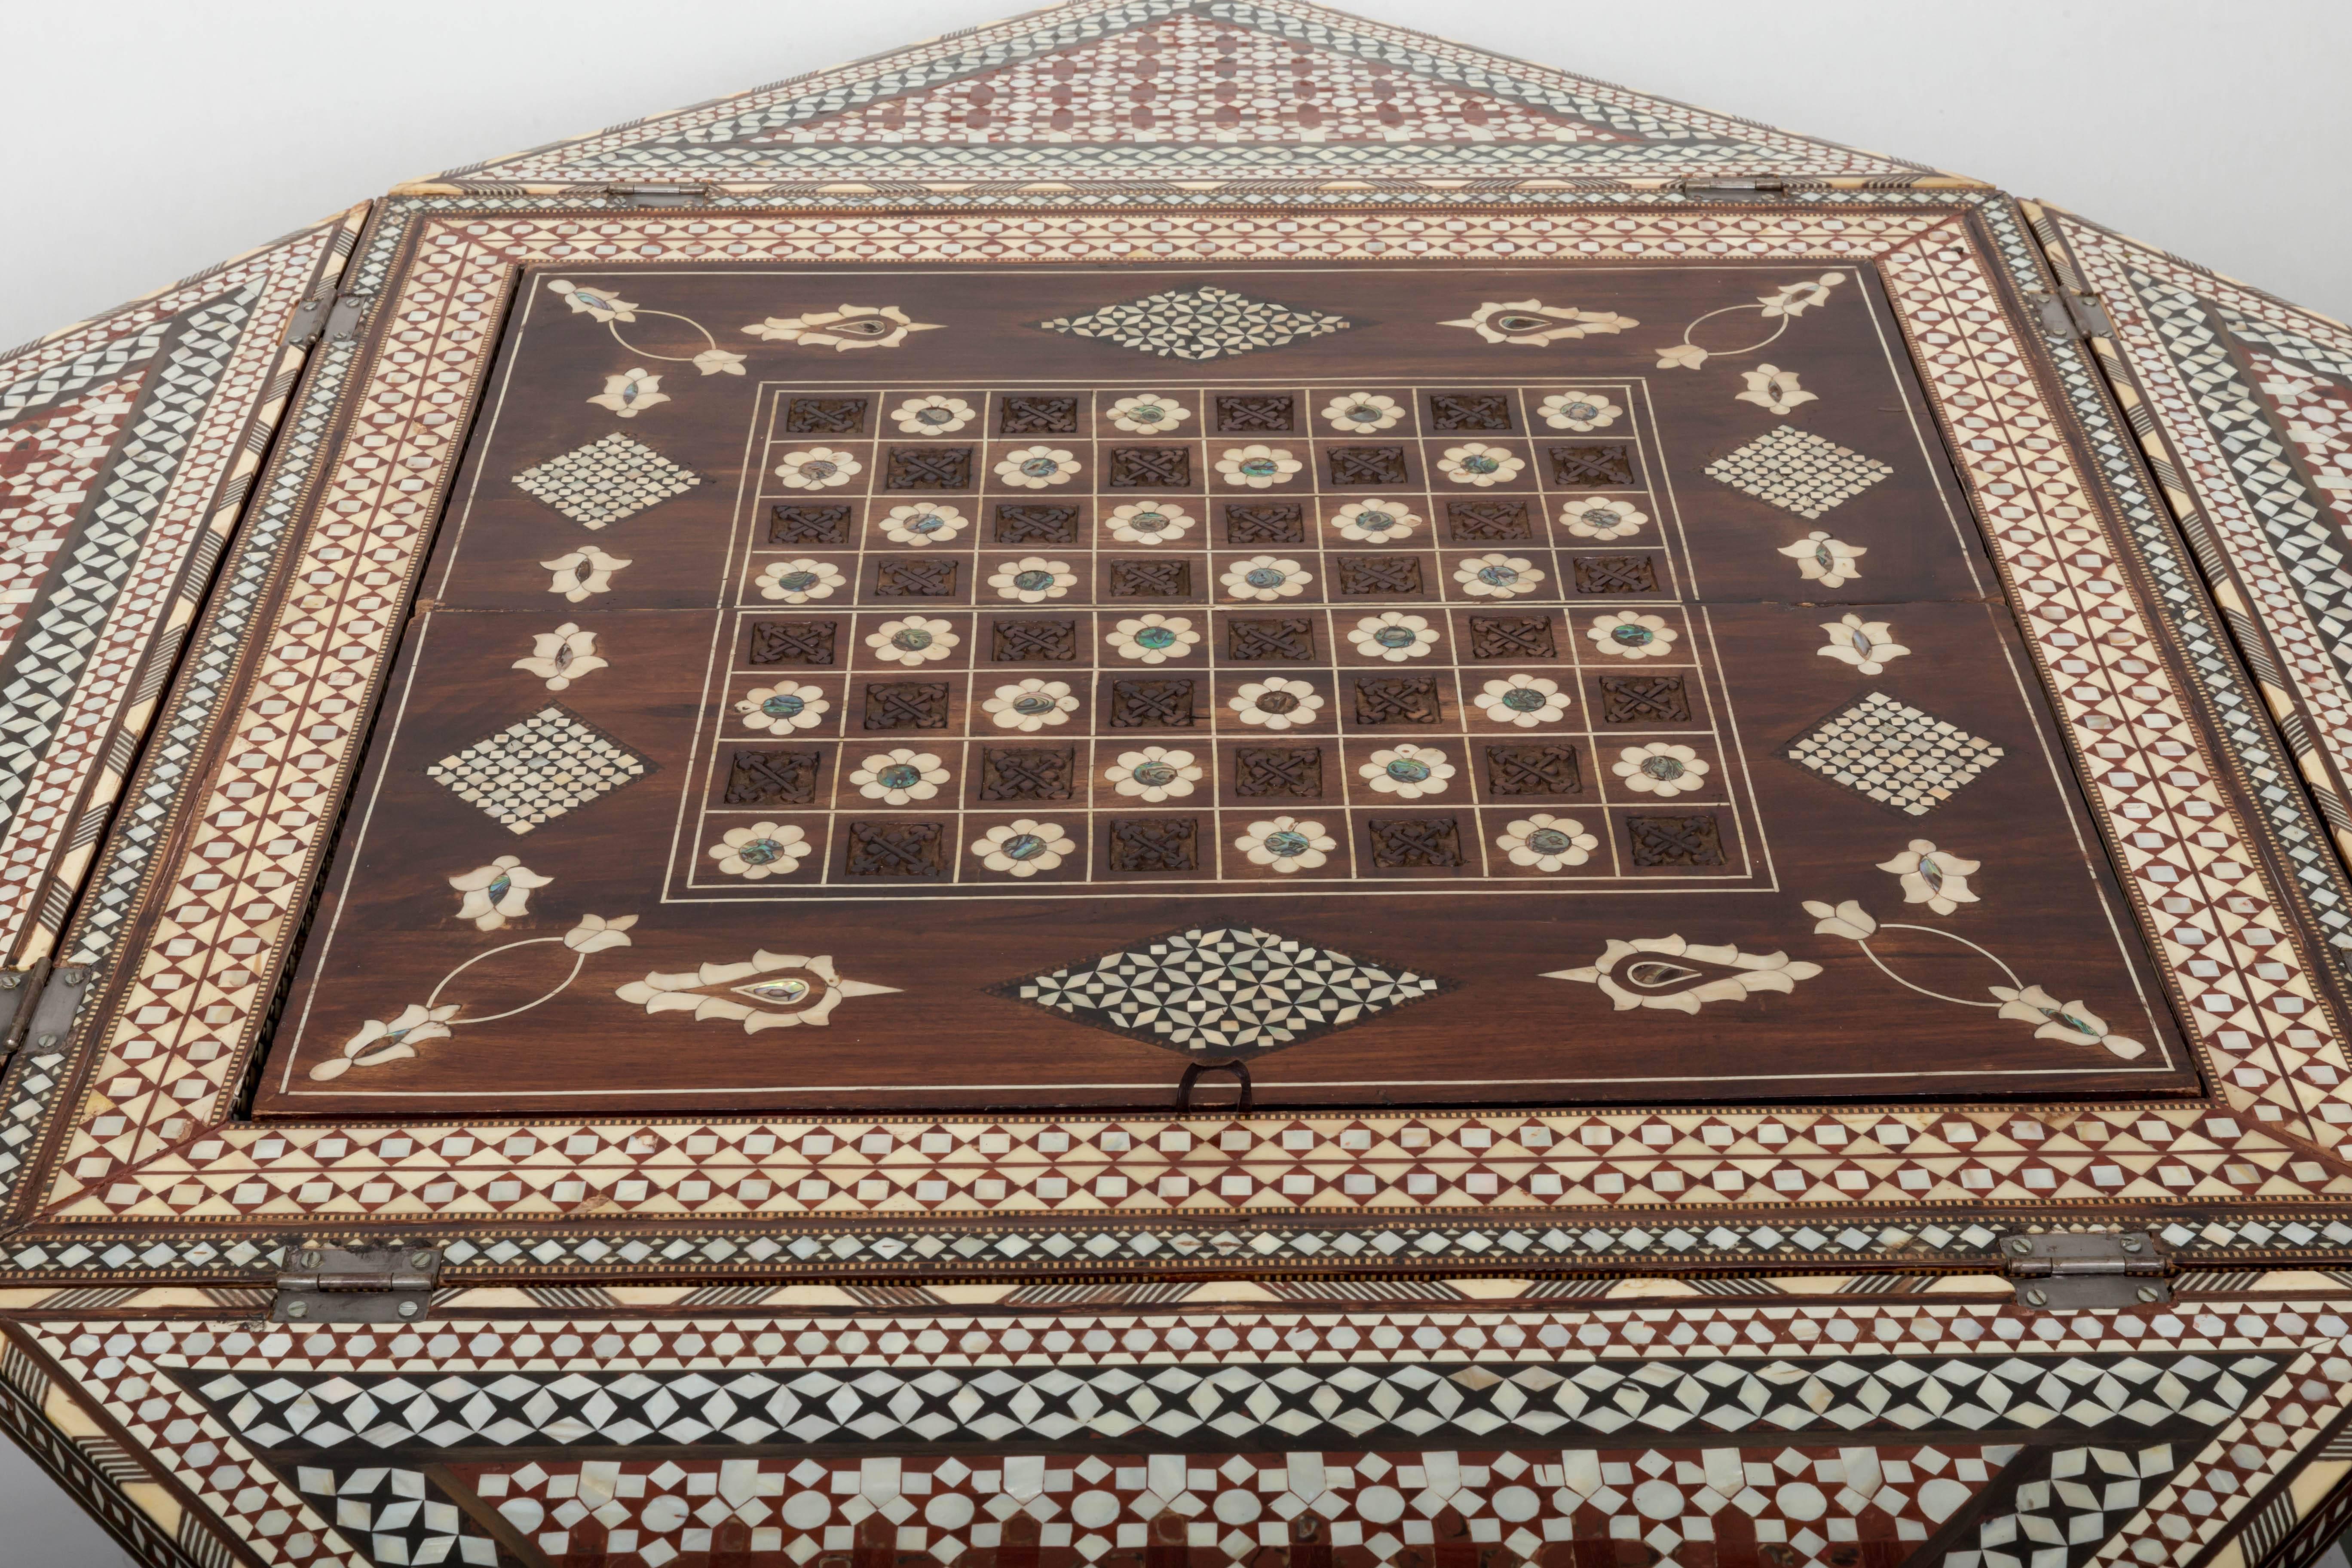 Moorish Style Inlaid Game Table 1